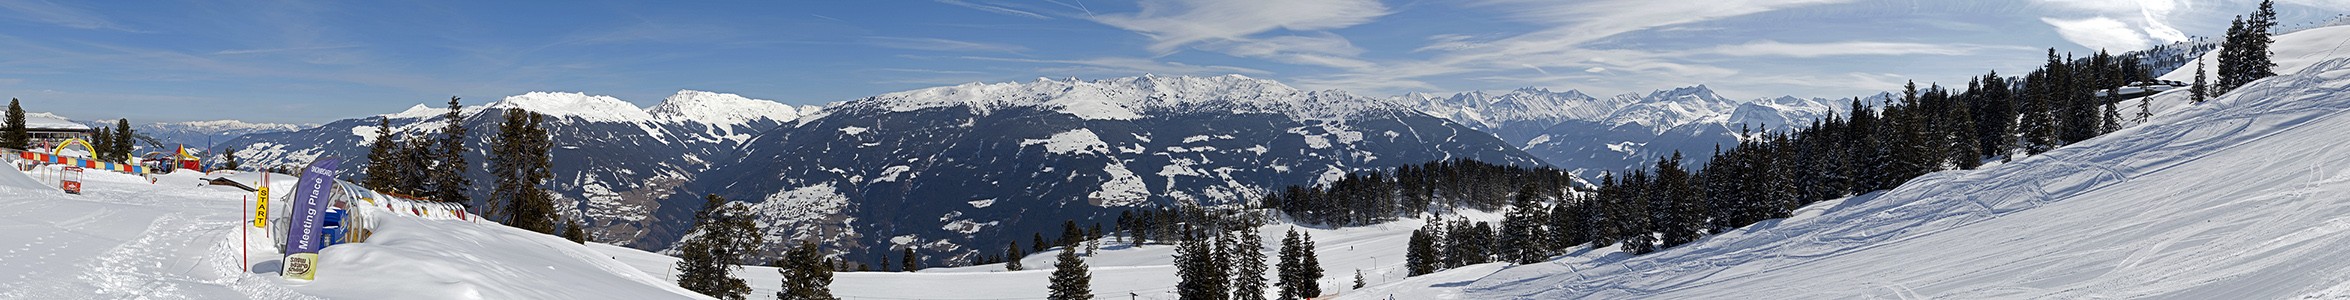 Hochzillertal Kitzbüheler Alpen